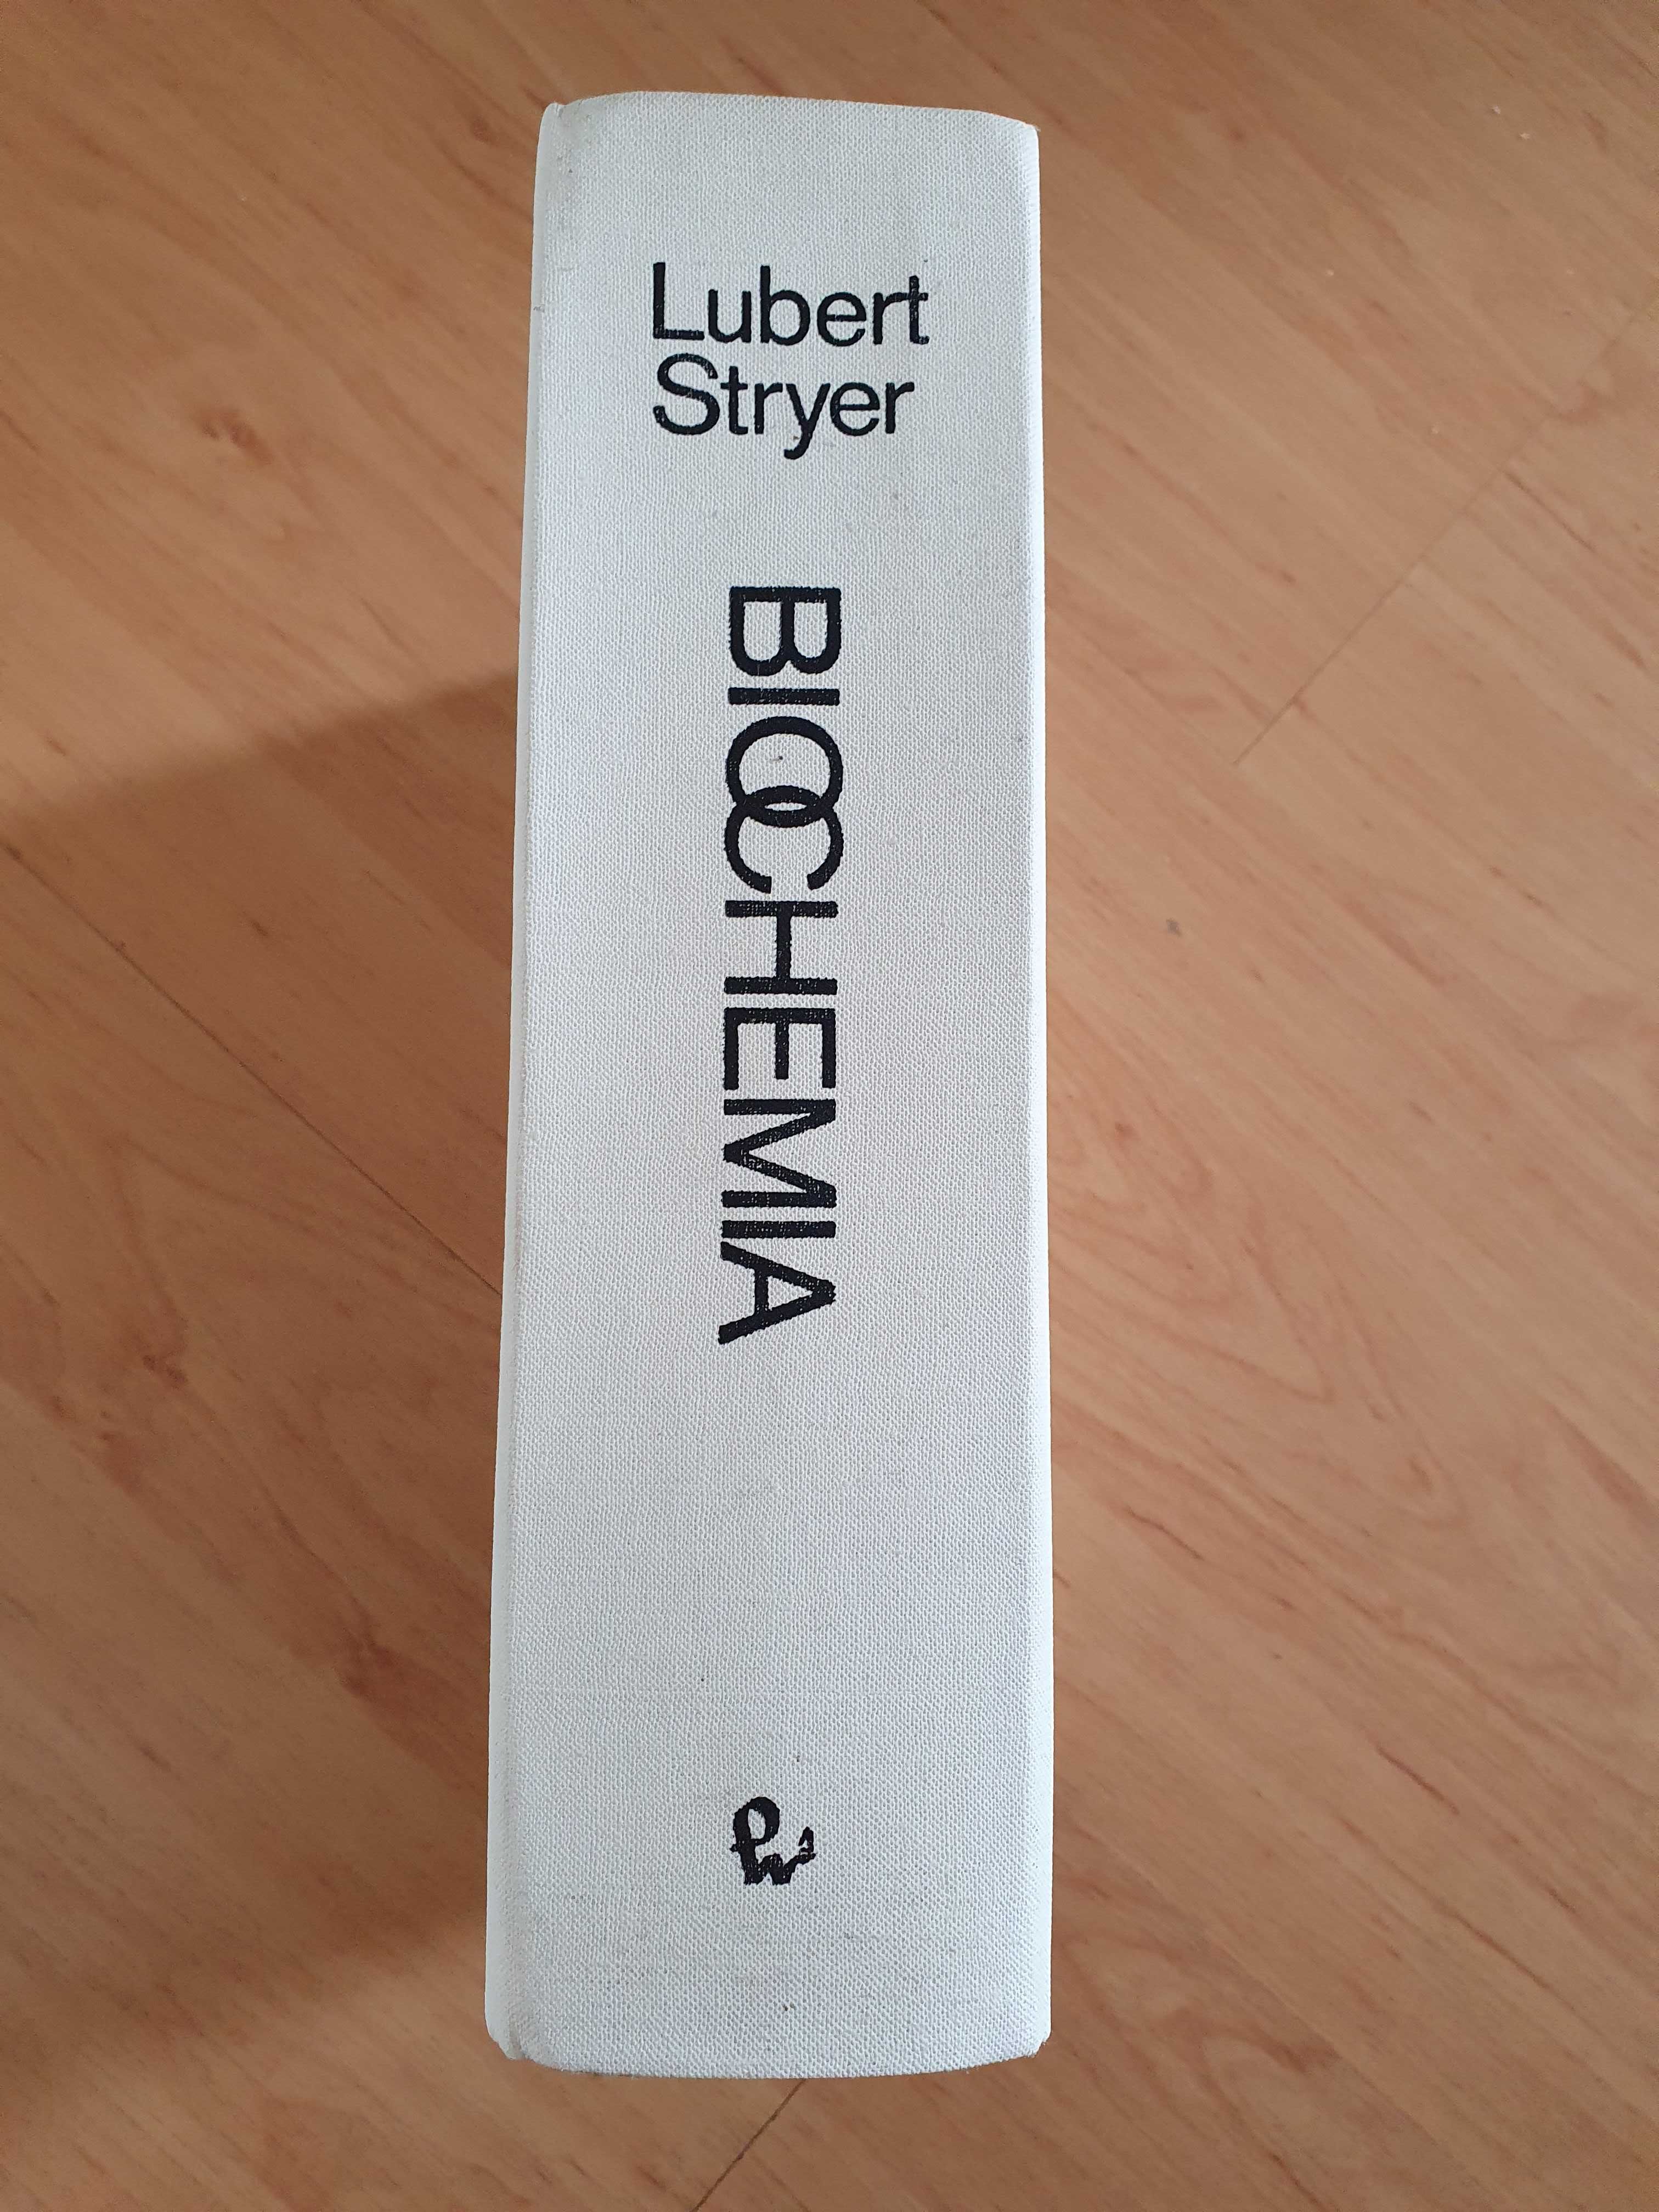 BIOCHEMIA, autor Lubert Stryer.